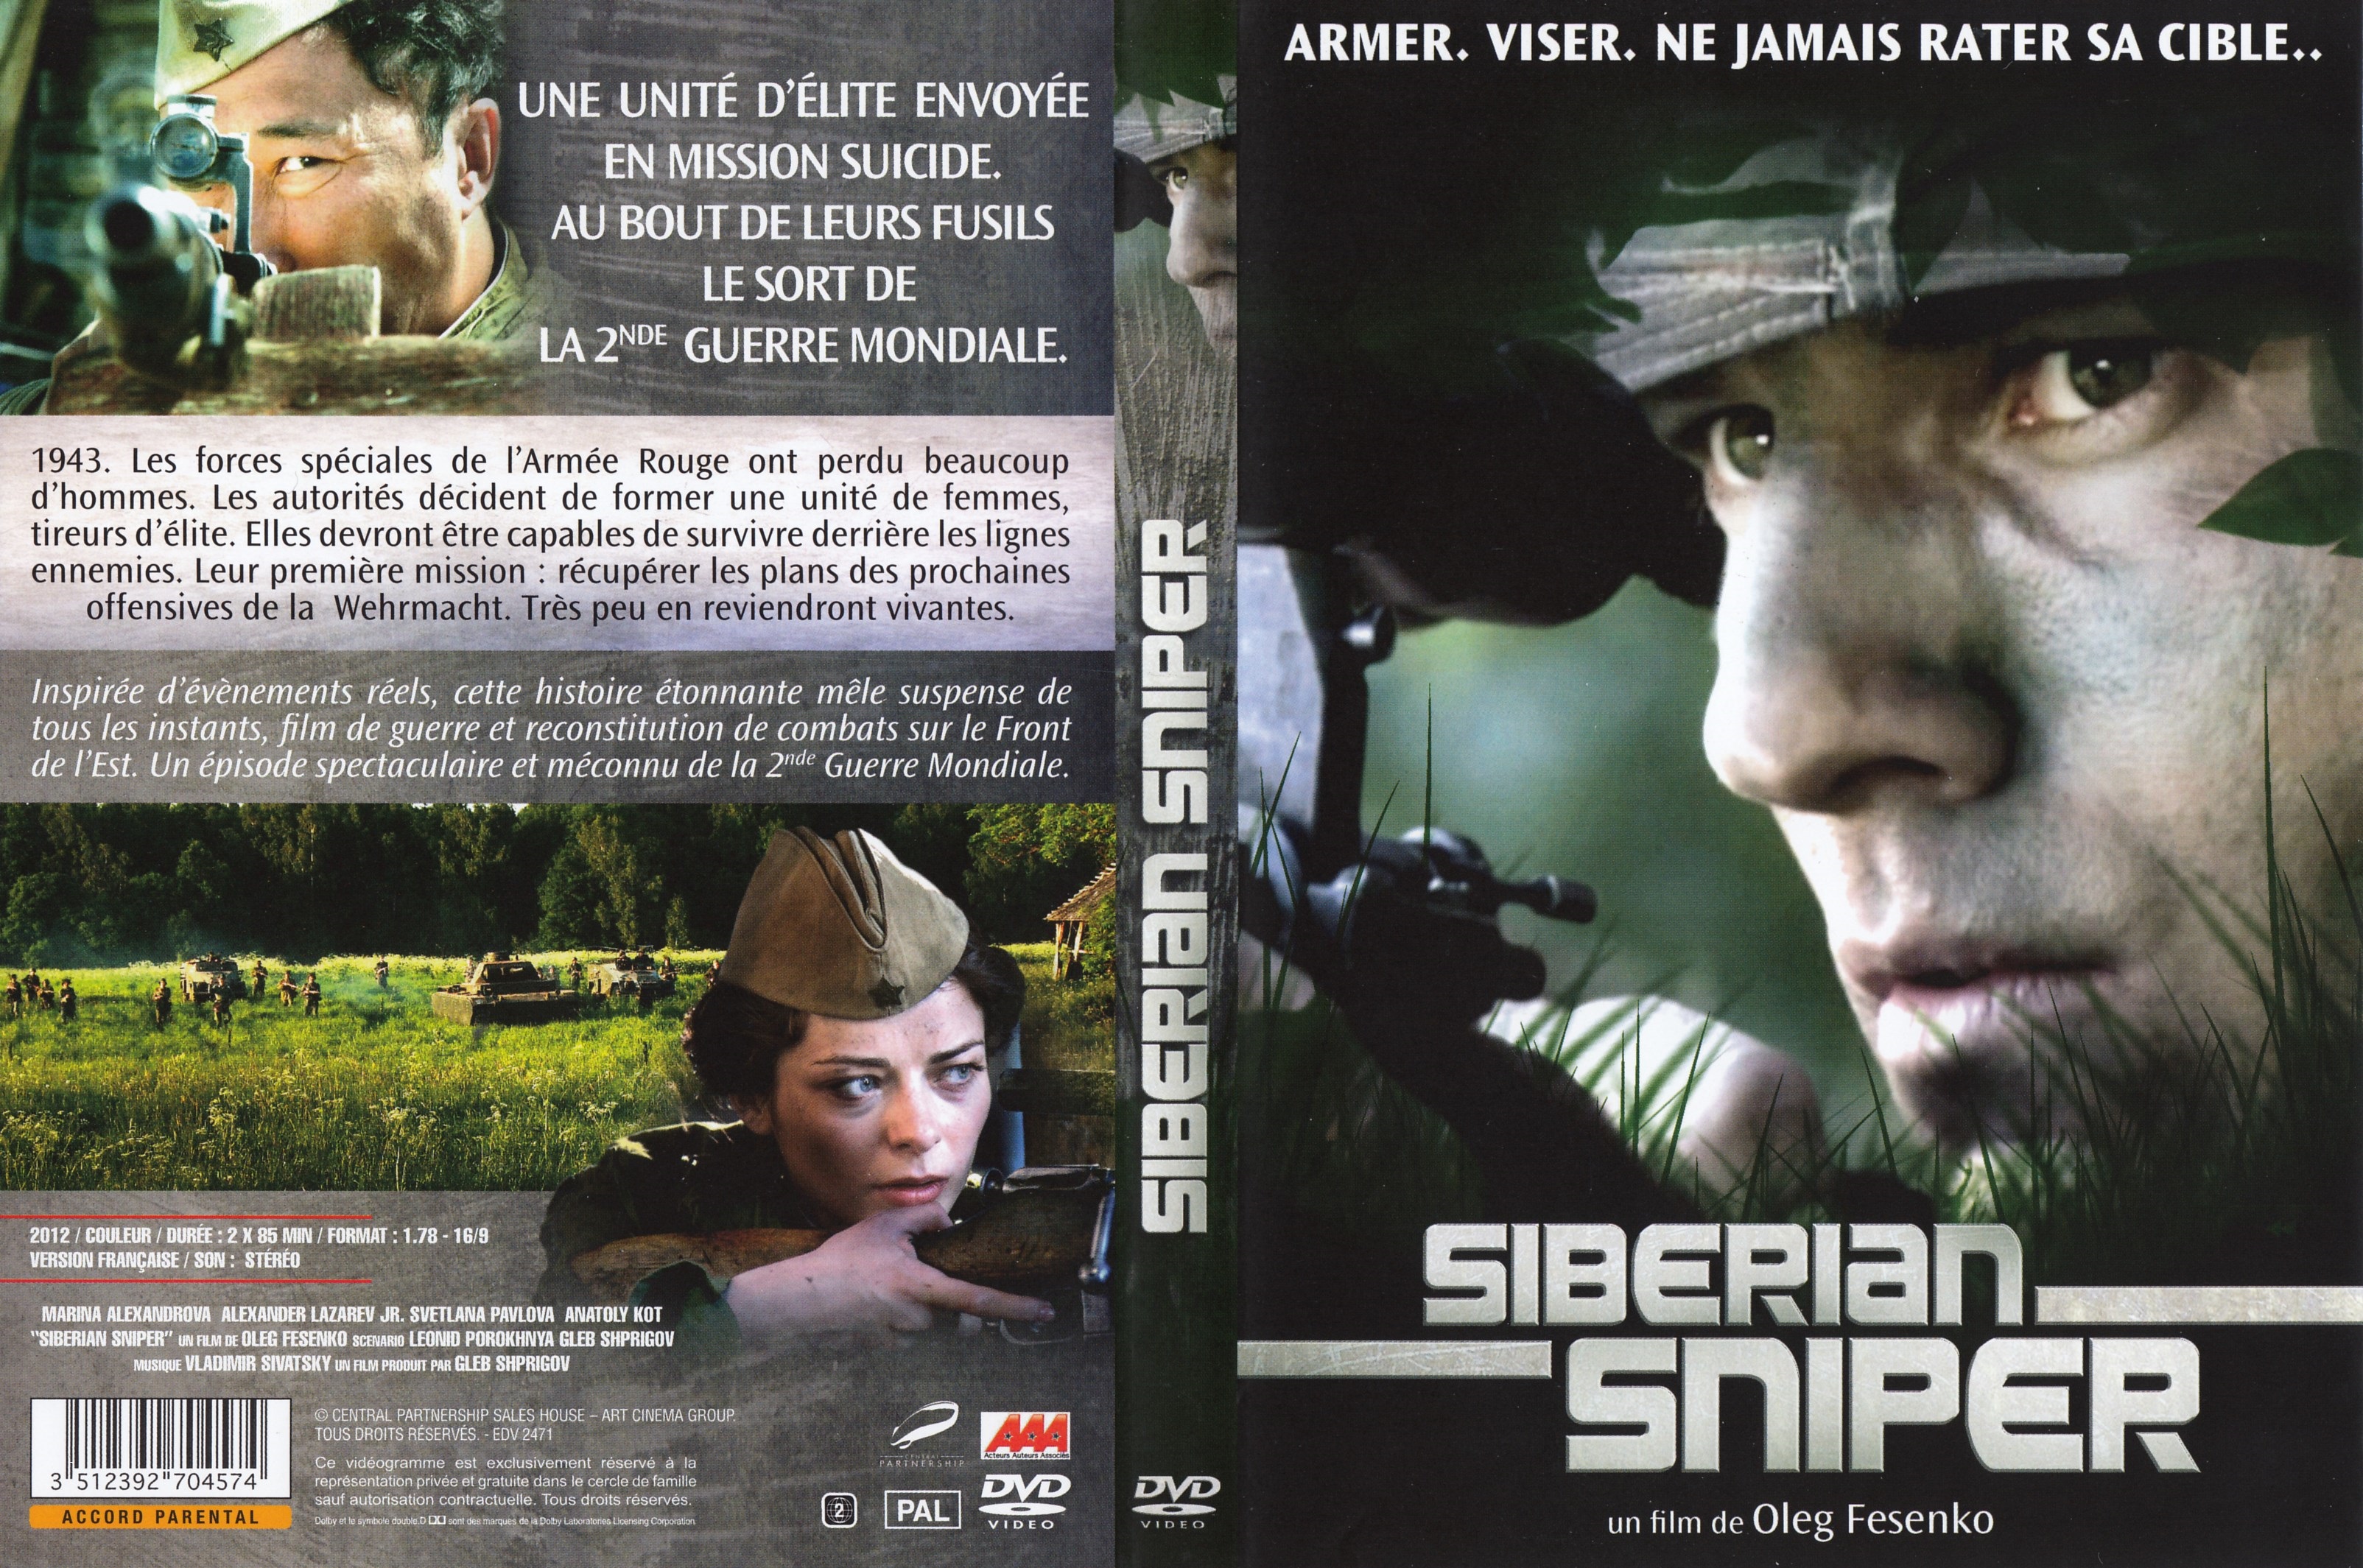 Jaquette DVD Siberian sniper